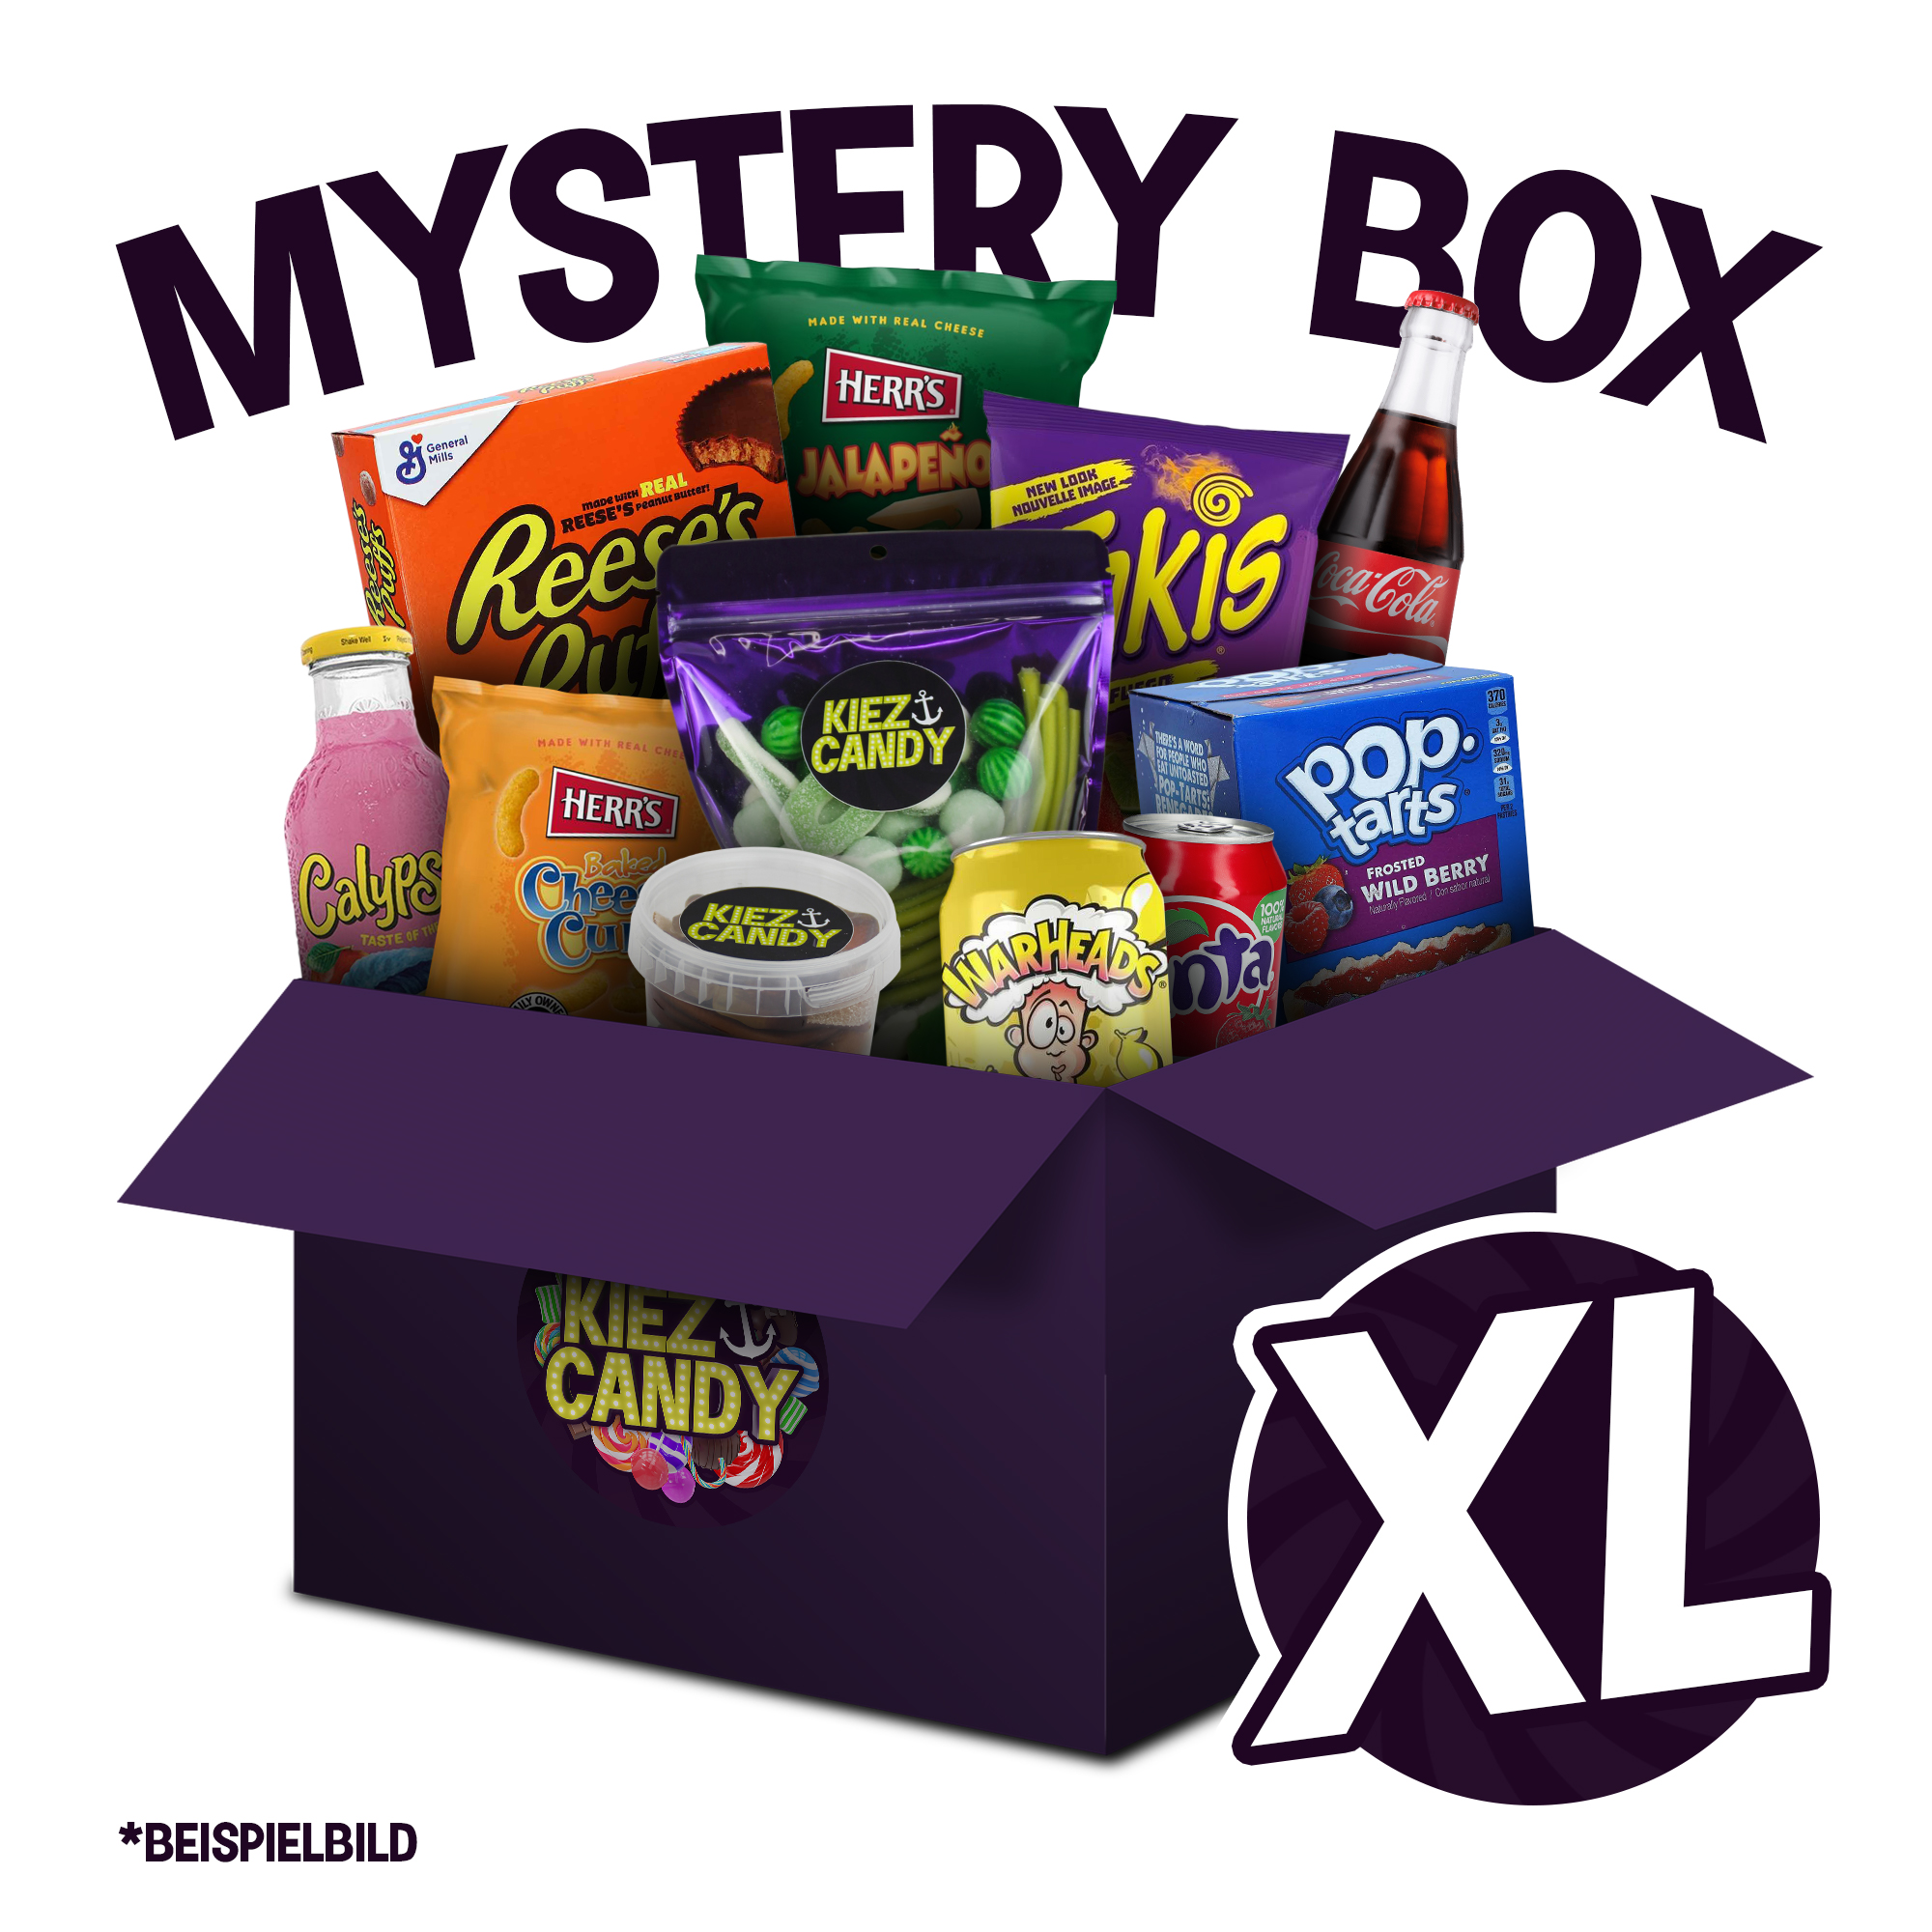 Mystery Box XL